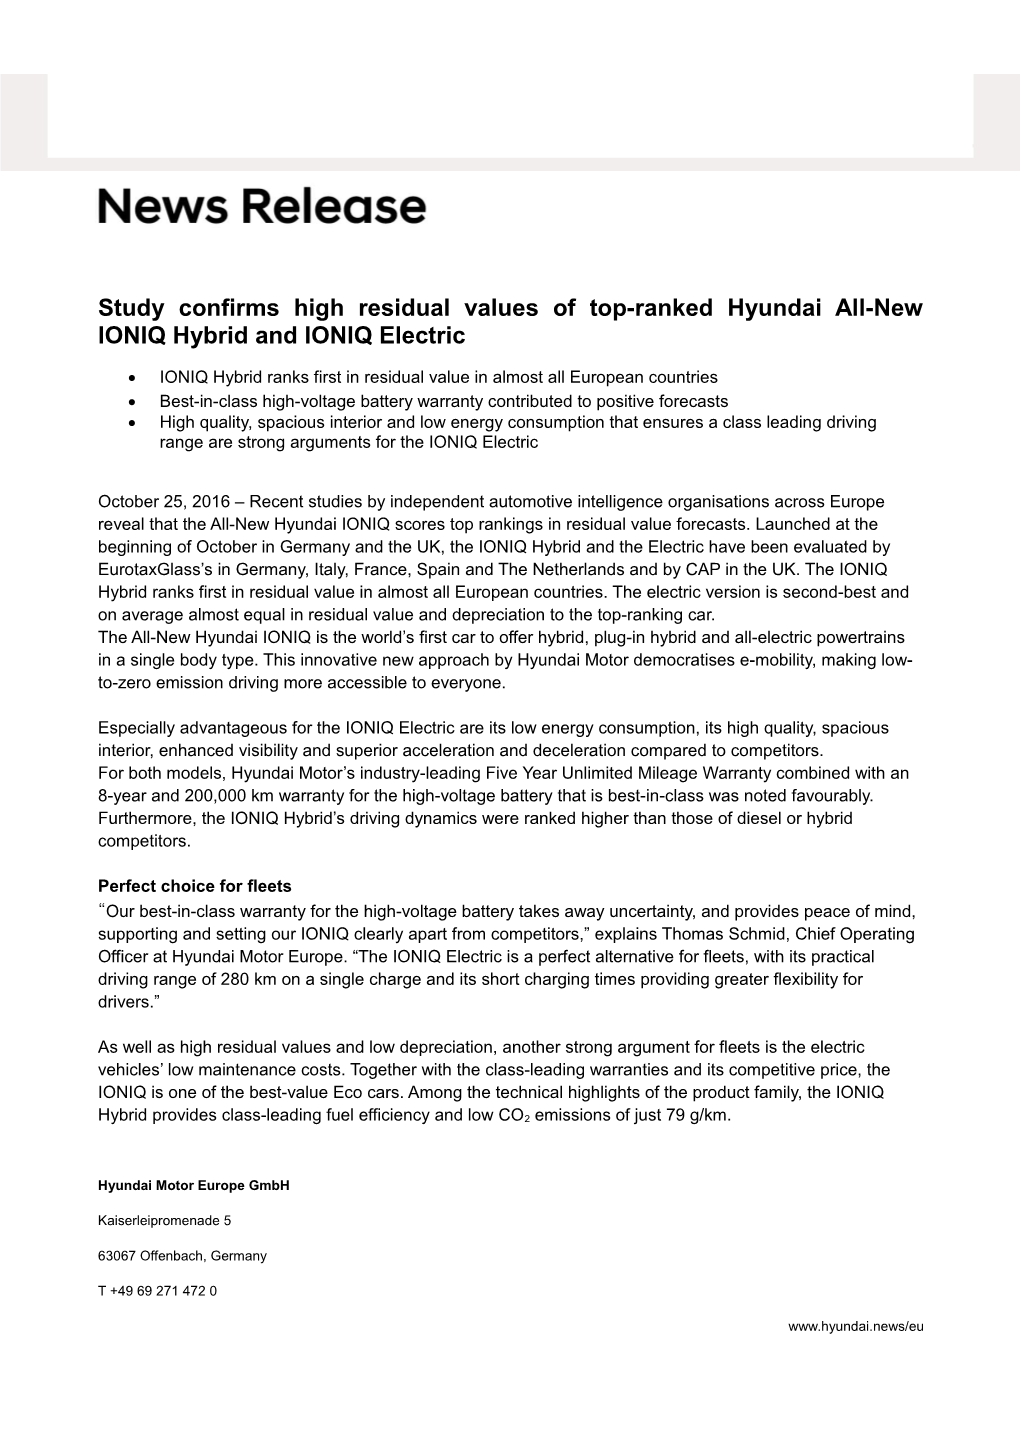 Study Confirms High Residual Values of Top-Ranked Hyundai All-New IONIQ Hybrid and IONIQ